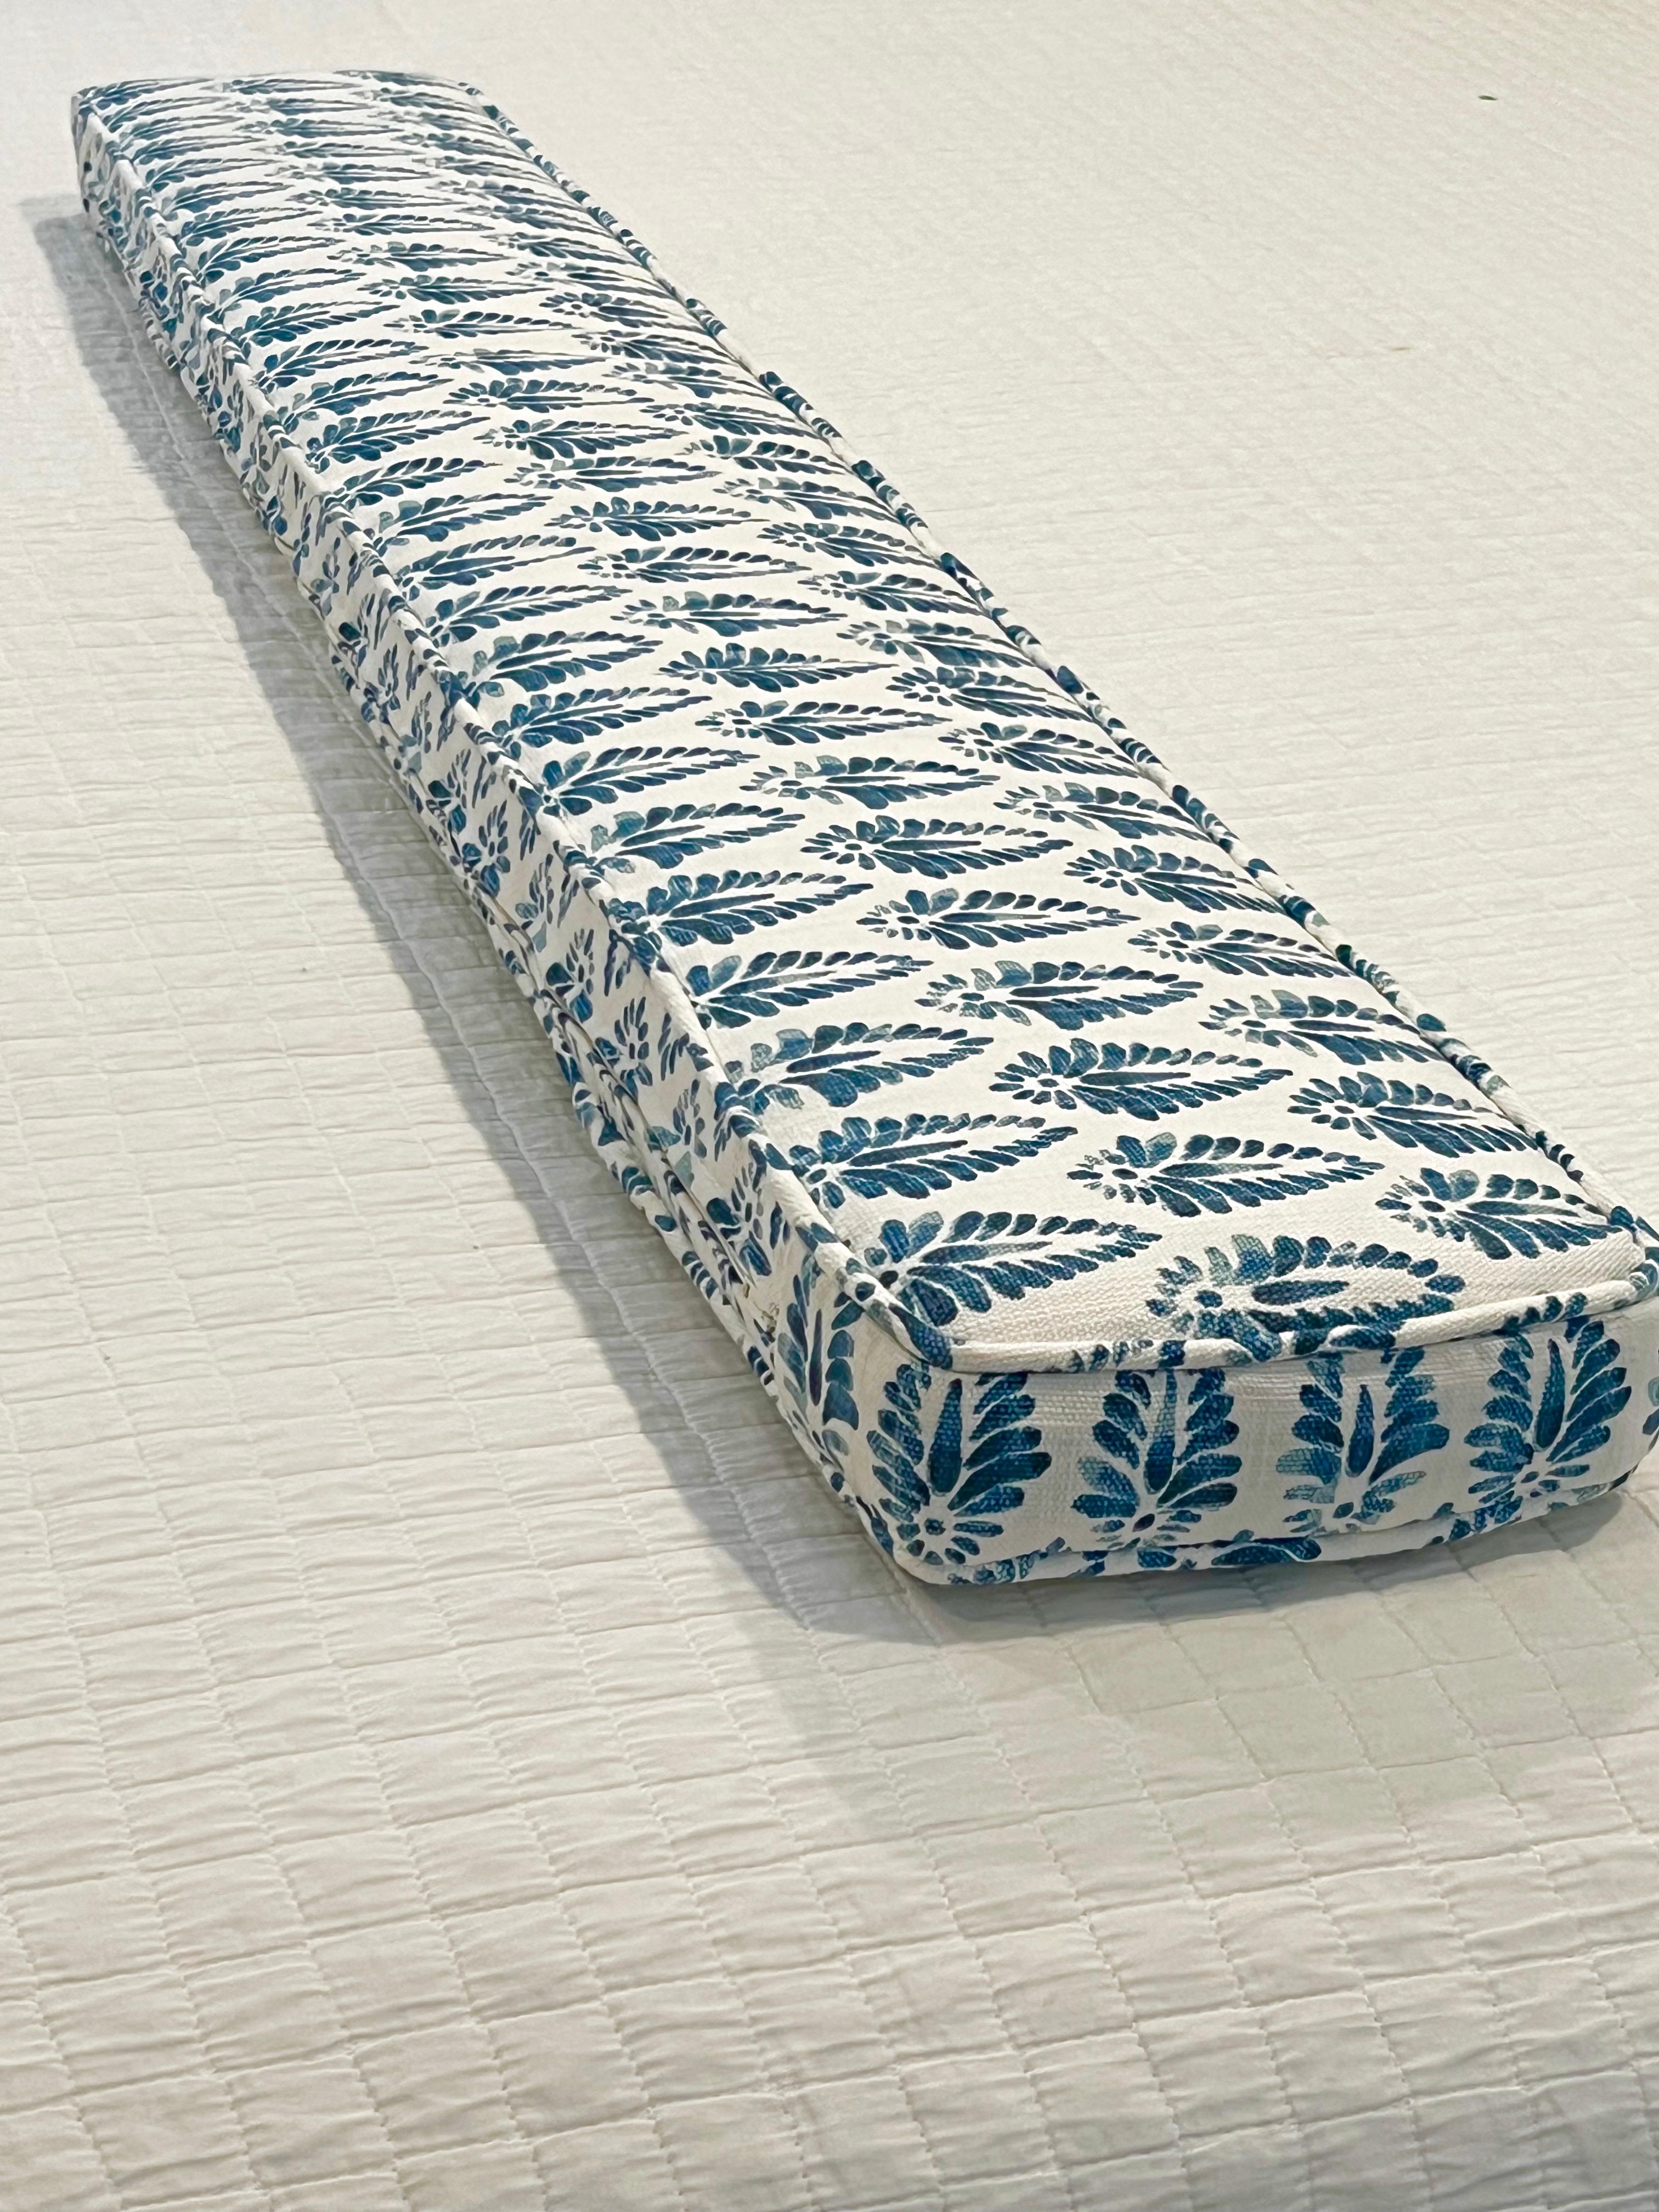 Organic Modern Handmade Upholstery Lumbar Rectangular Blue White Fabric Pillow For Sale